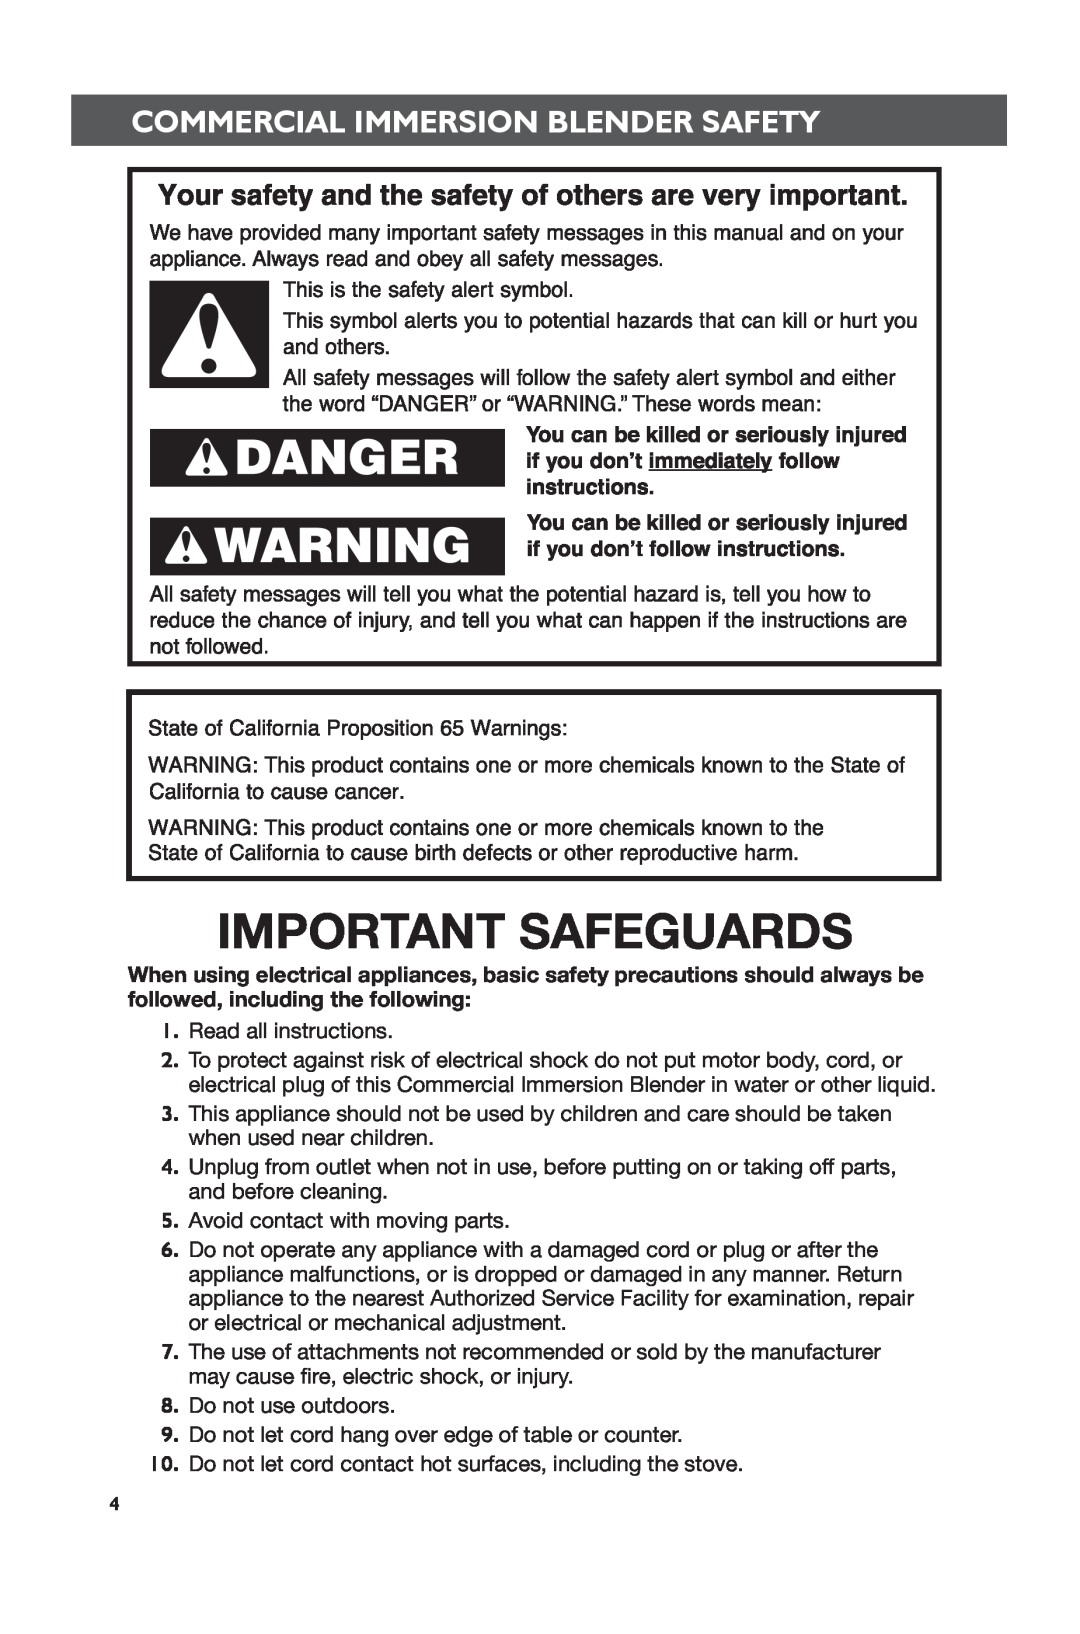 KitchenAid KHBC210, KHBC212, KHBC208 manual Important Safeguards, Commercial Immersion Blender Safety 